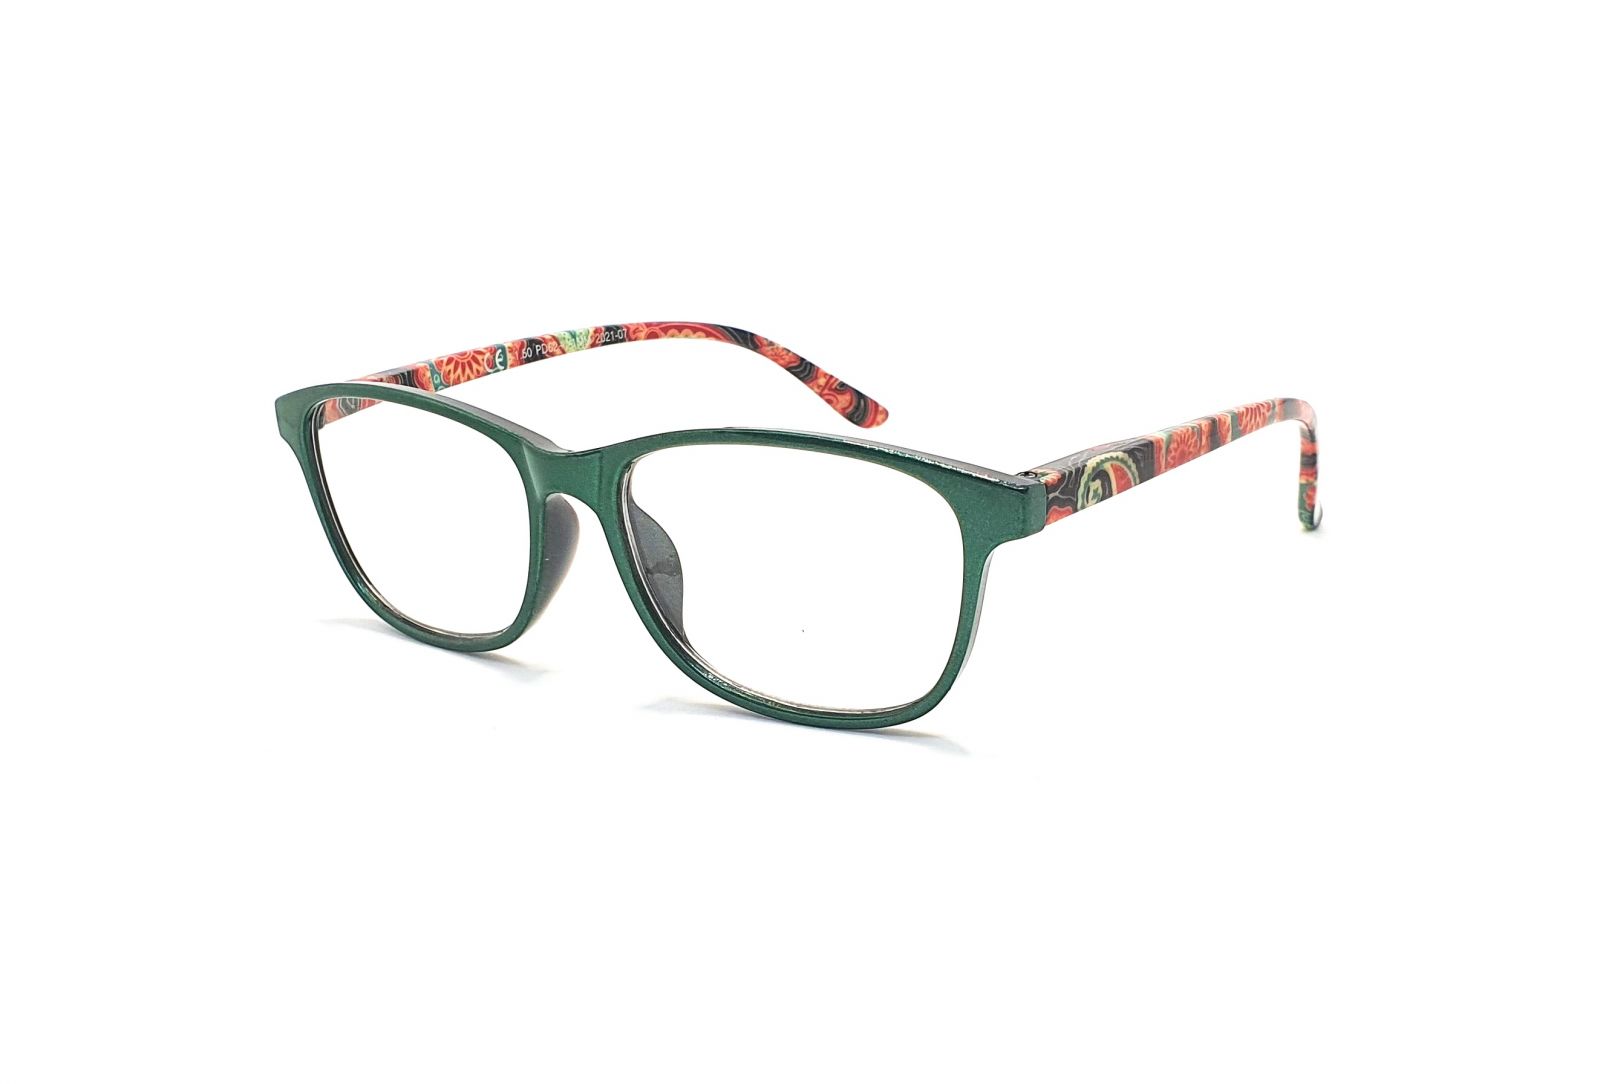 INfocus Dioptrické brýle R4150 / +1,50 flex green-mix